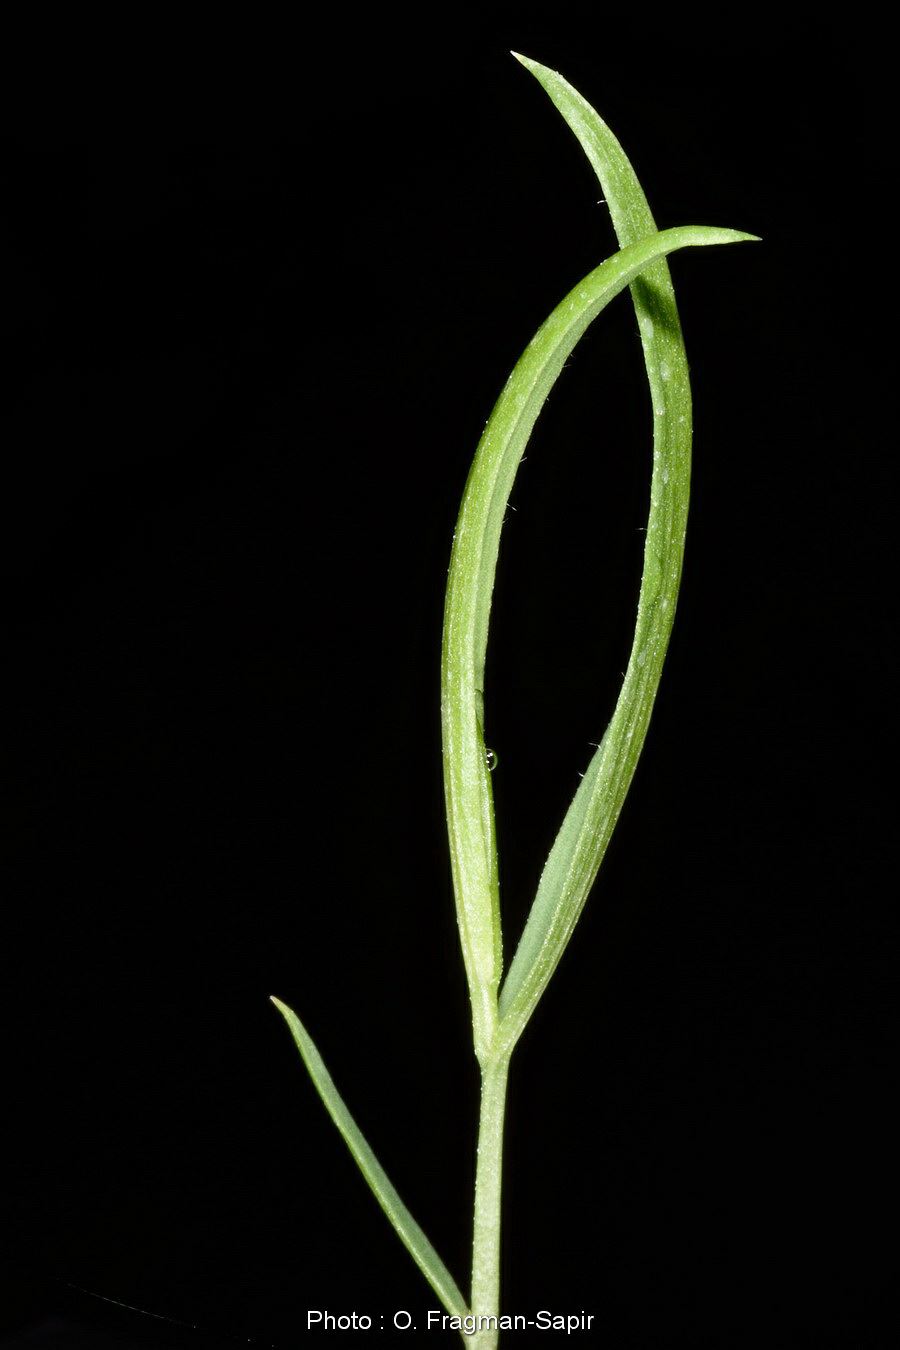 Lathyrus nissolia - Grass Vetchling, טופח עדין, טופח עדין